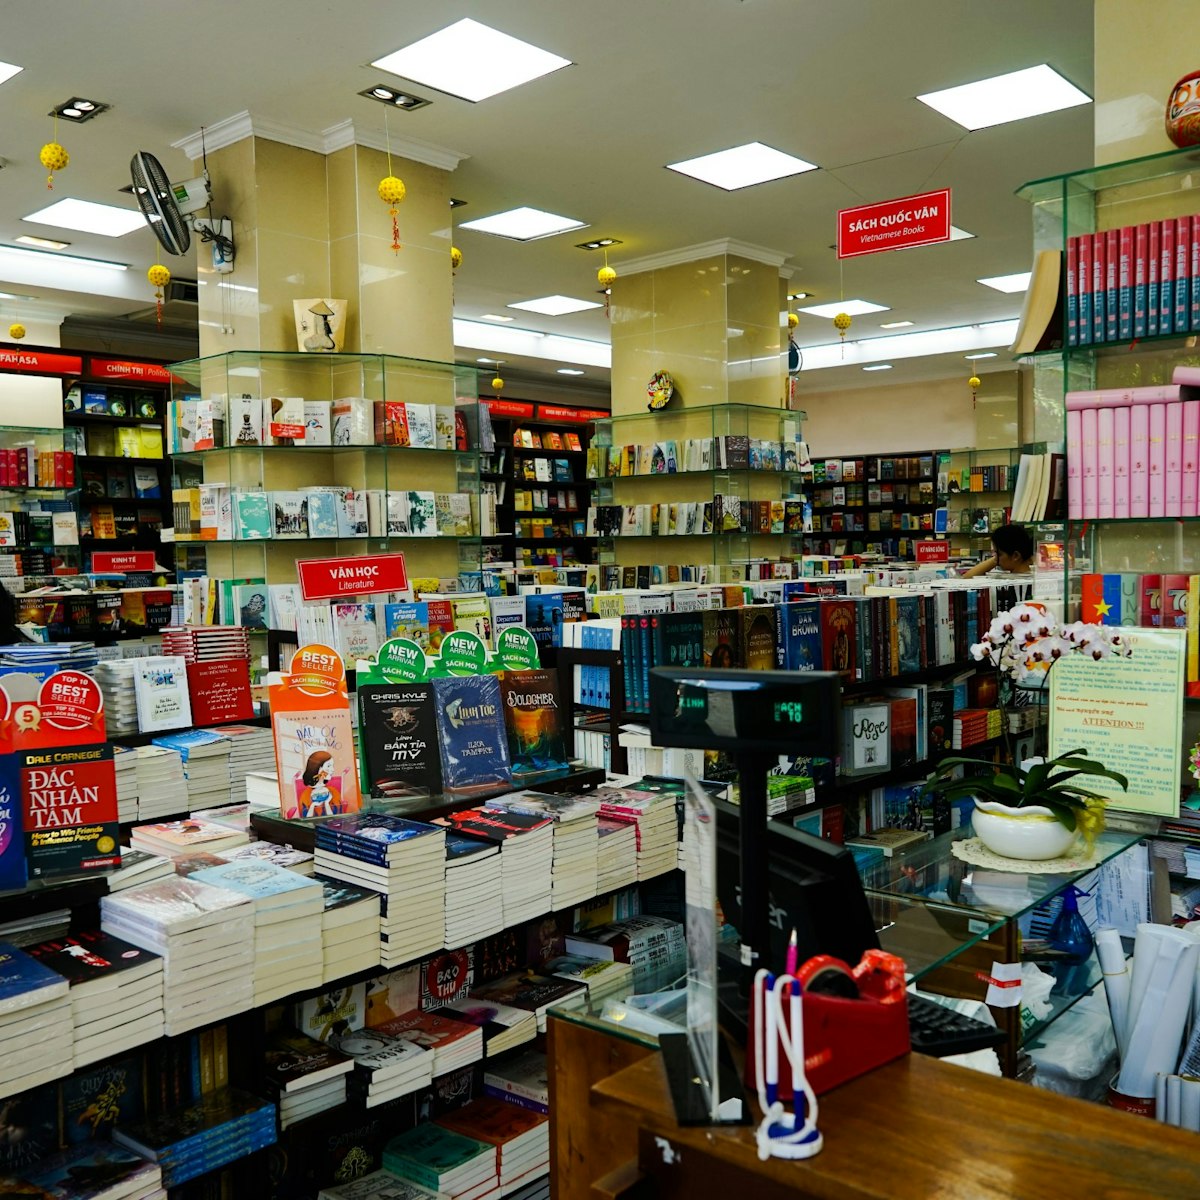 Inside the Fahasa Bookshop